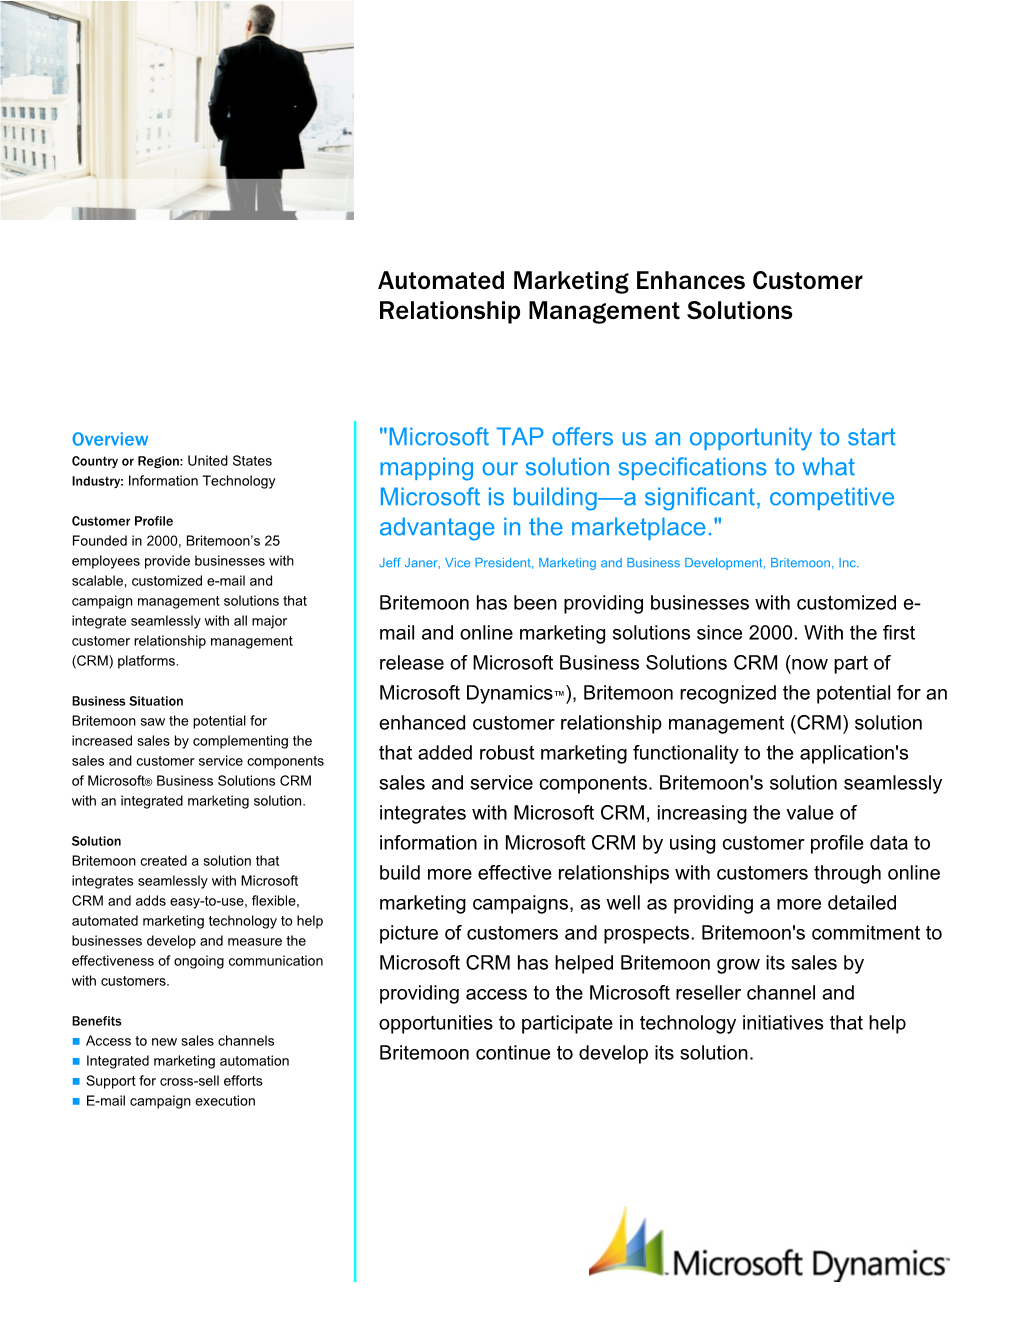 Automated Marketing Enhances Customer Relationship Management Solutions